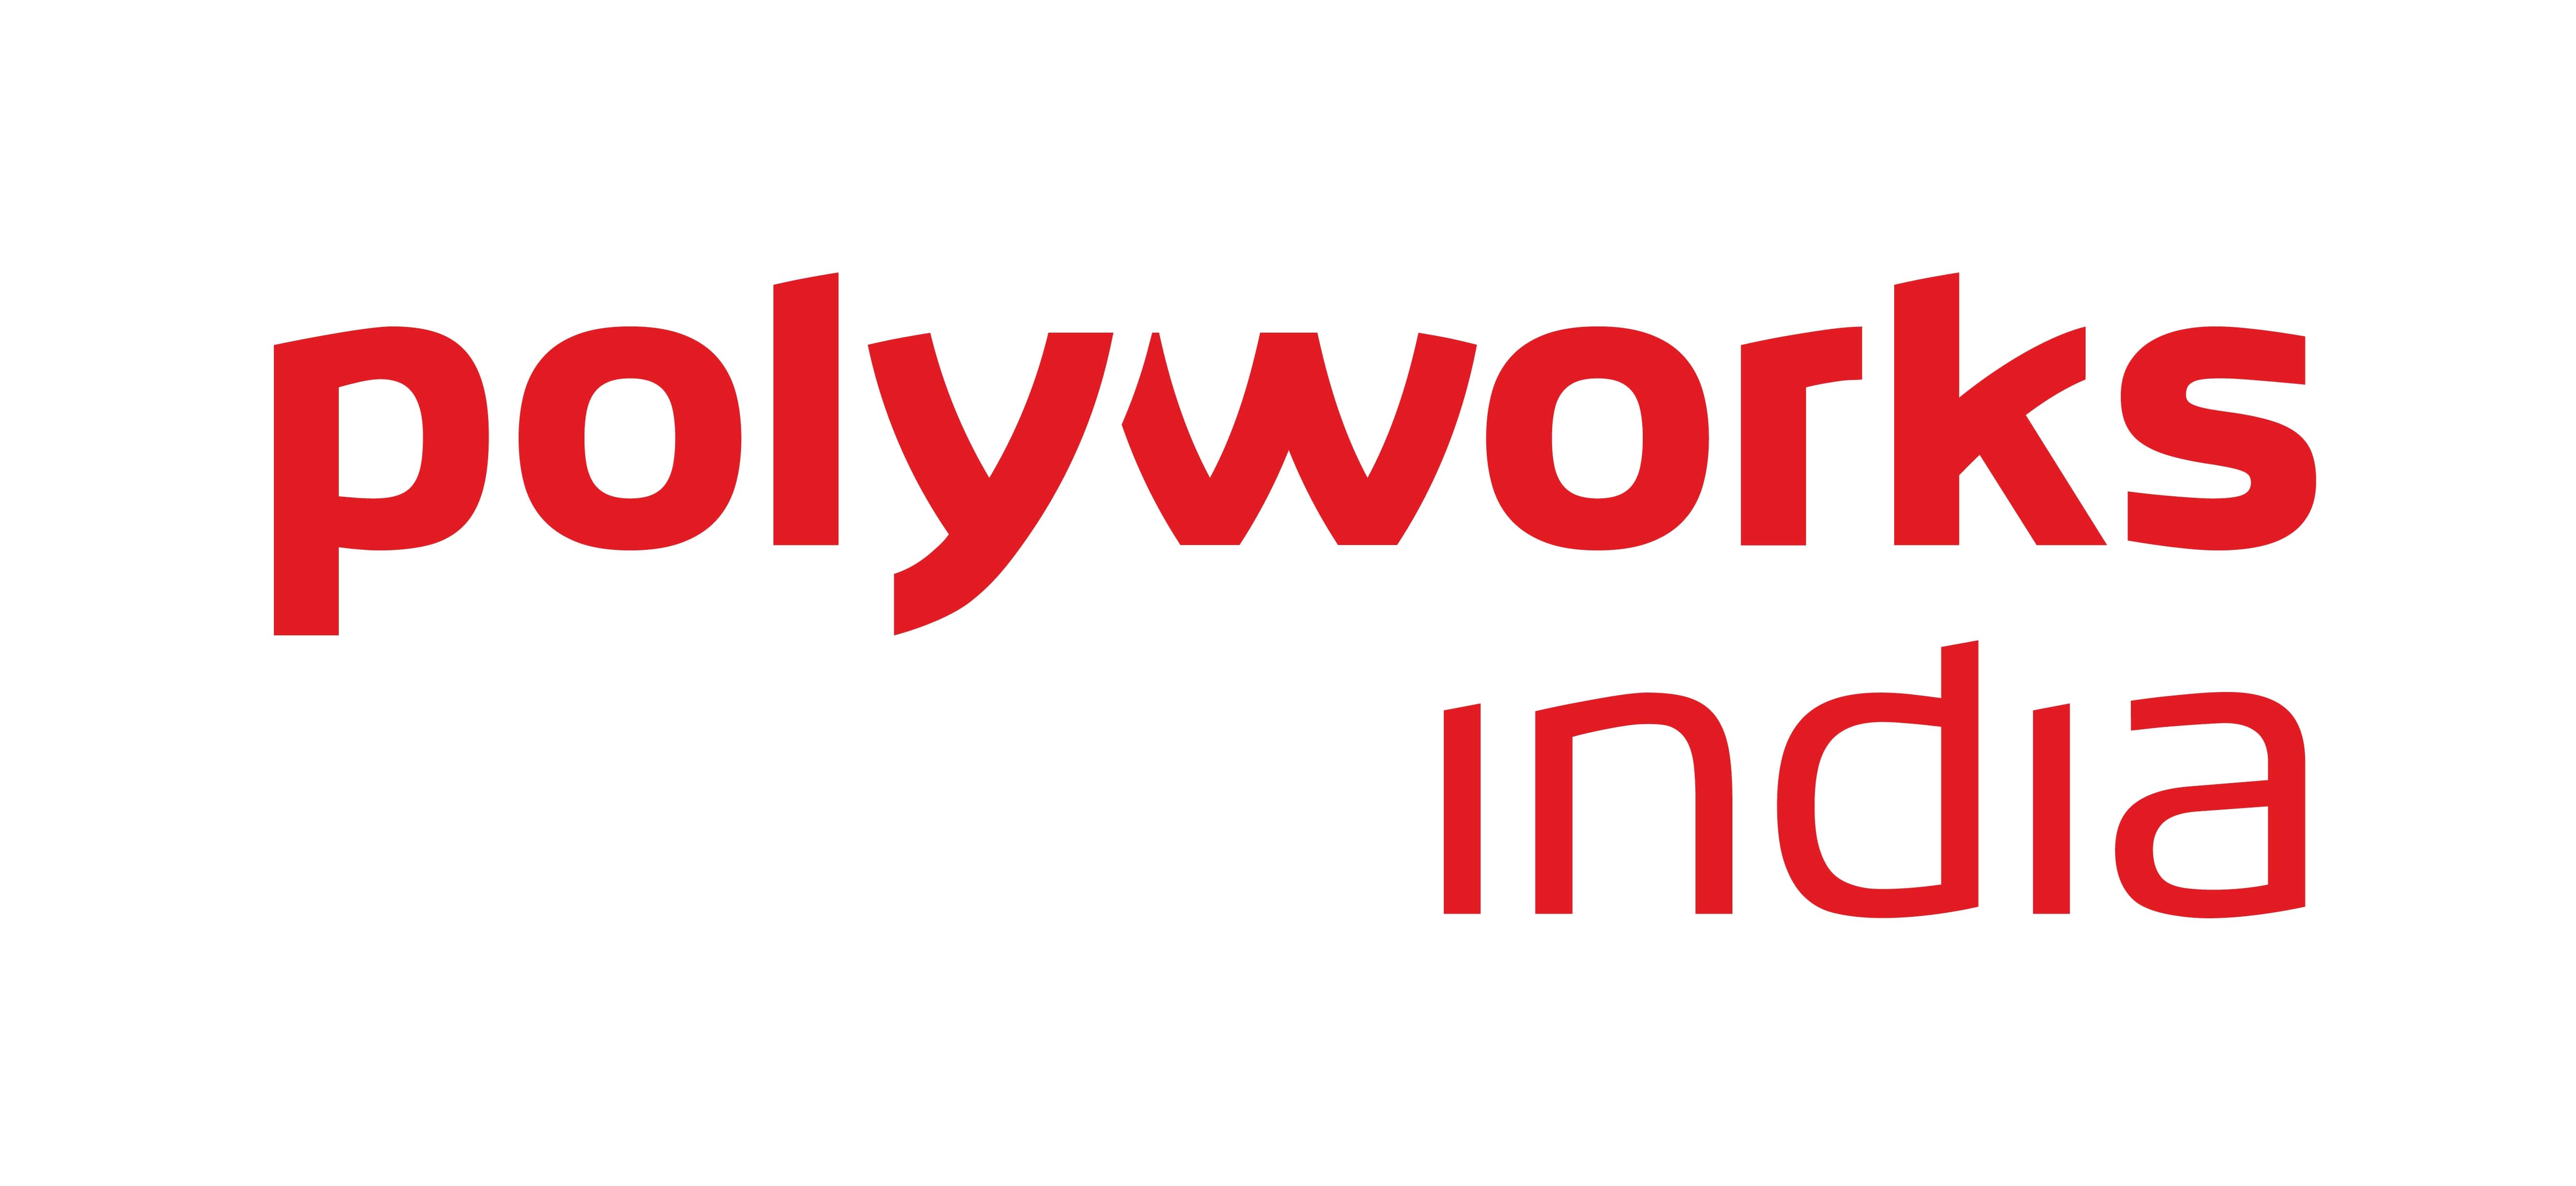 PolyWorks India 2x1 ft